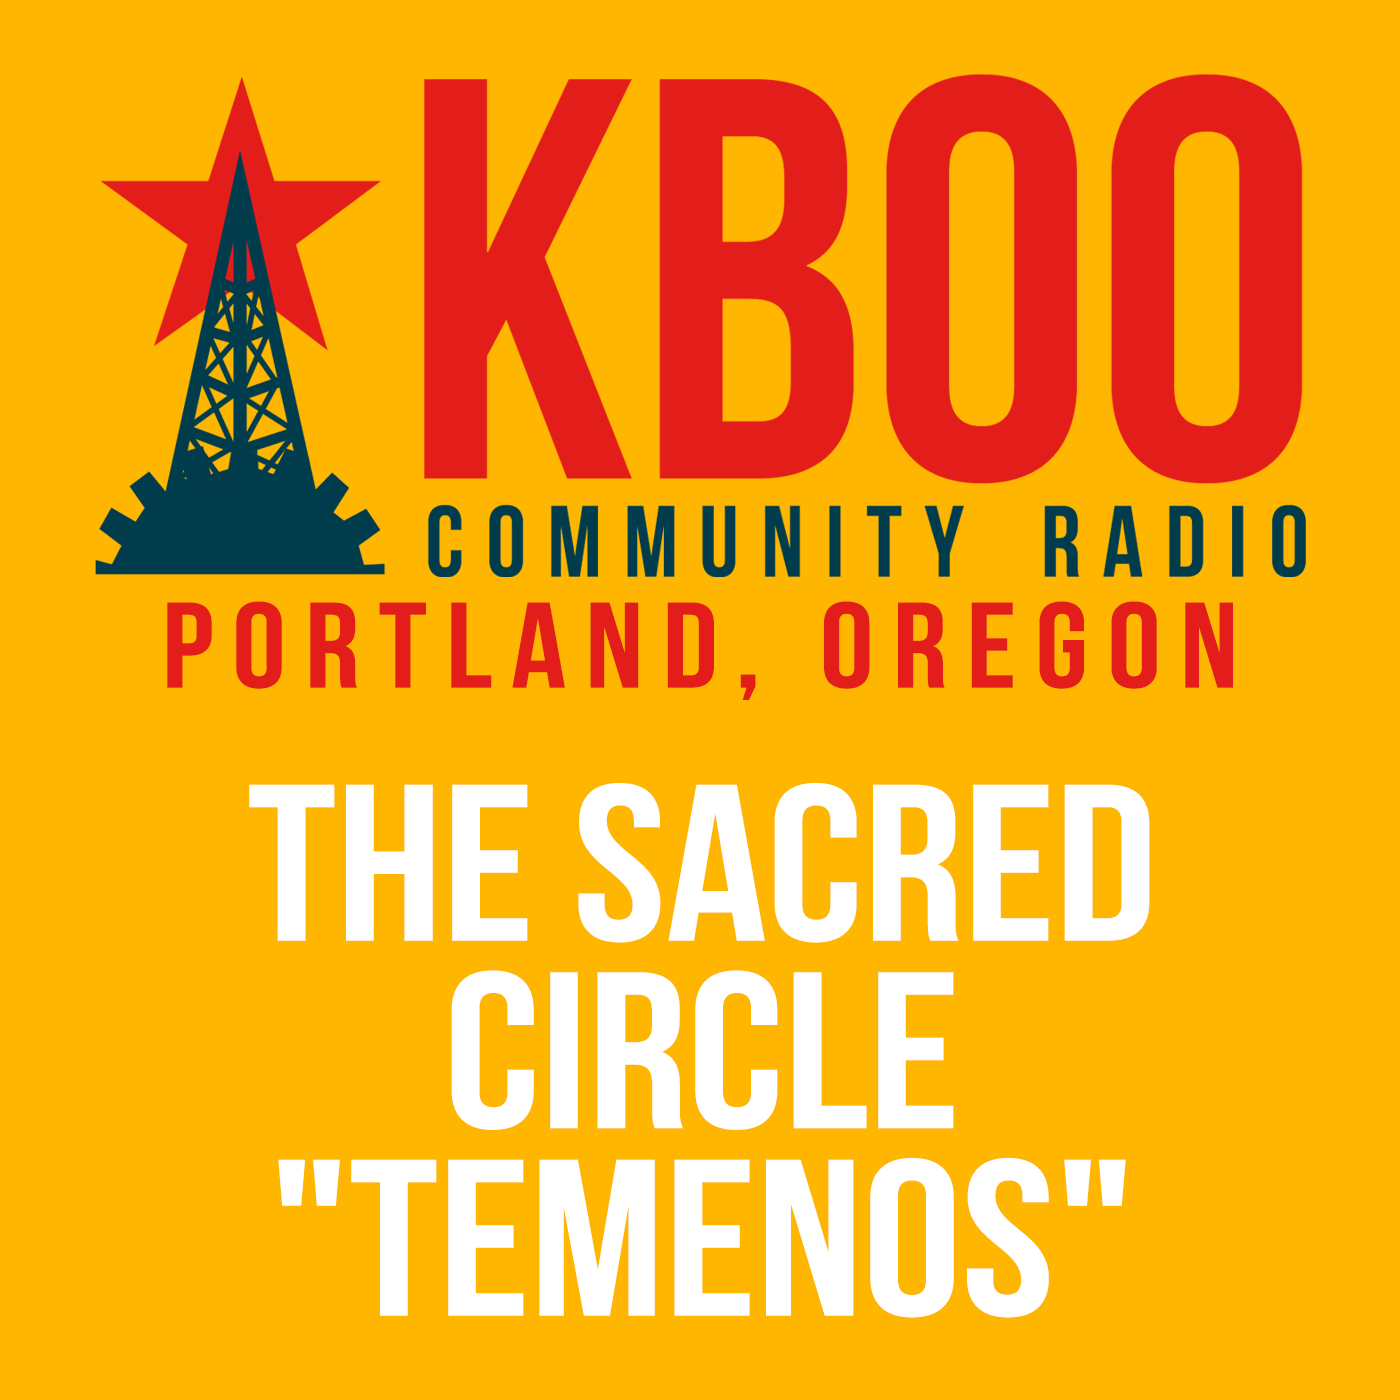 The Sacred Circle "TEMENOS" on 01/05/24